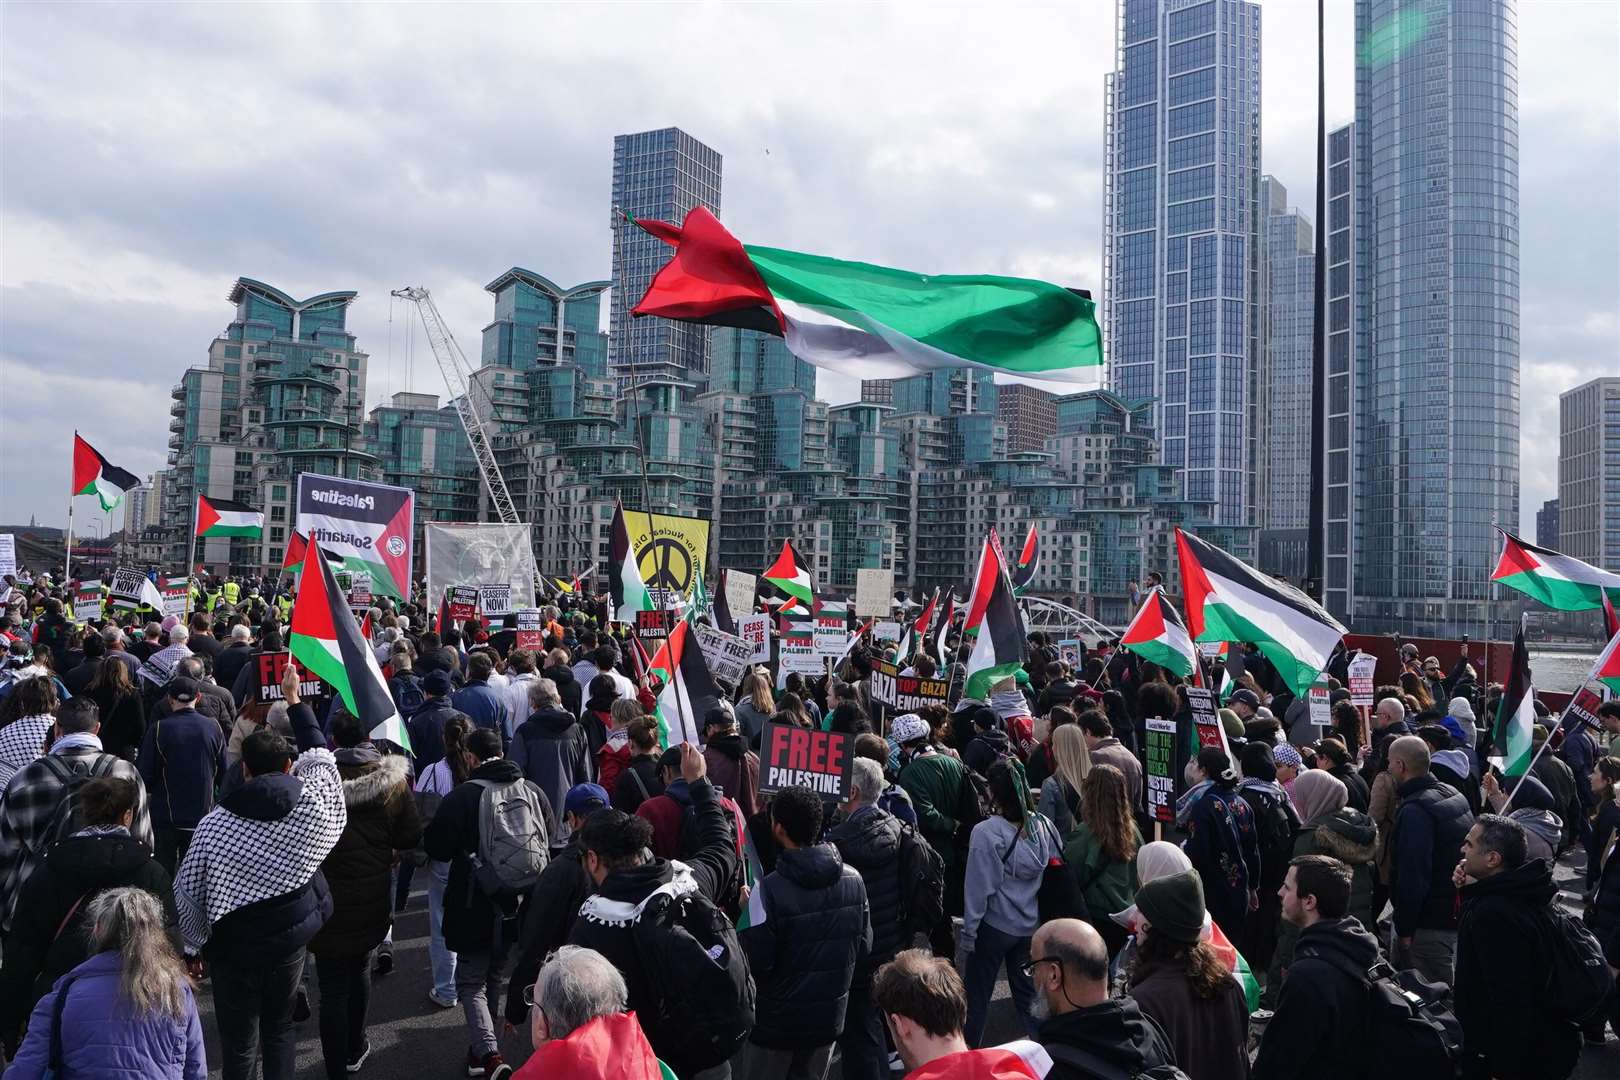 Thousands of people took part in Saturday’s march (Jordan Pettitt/PA)